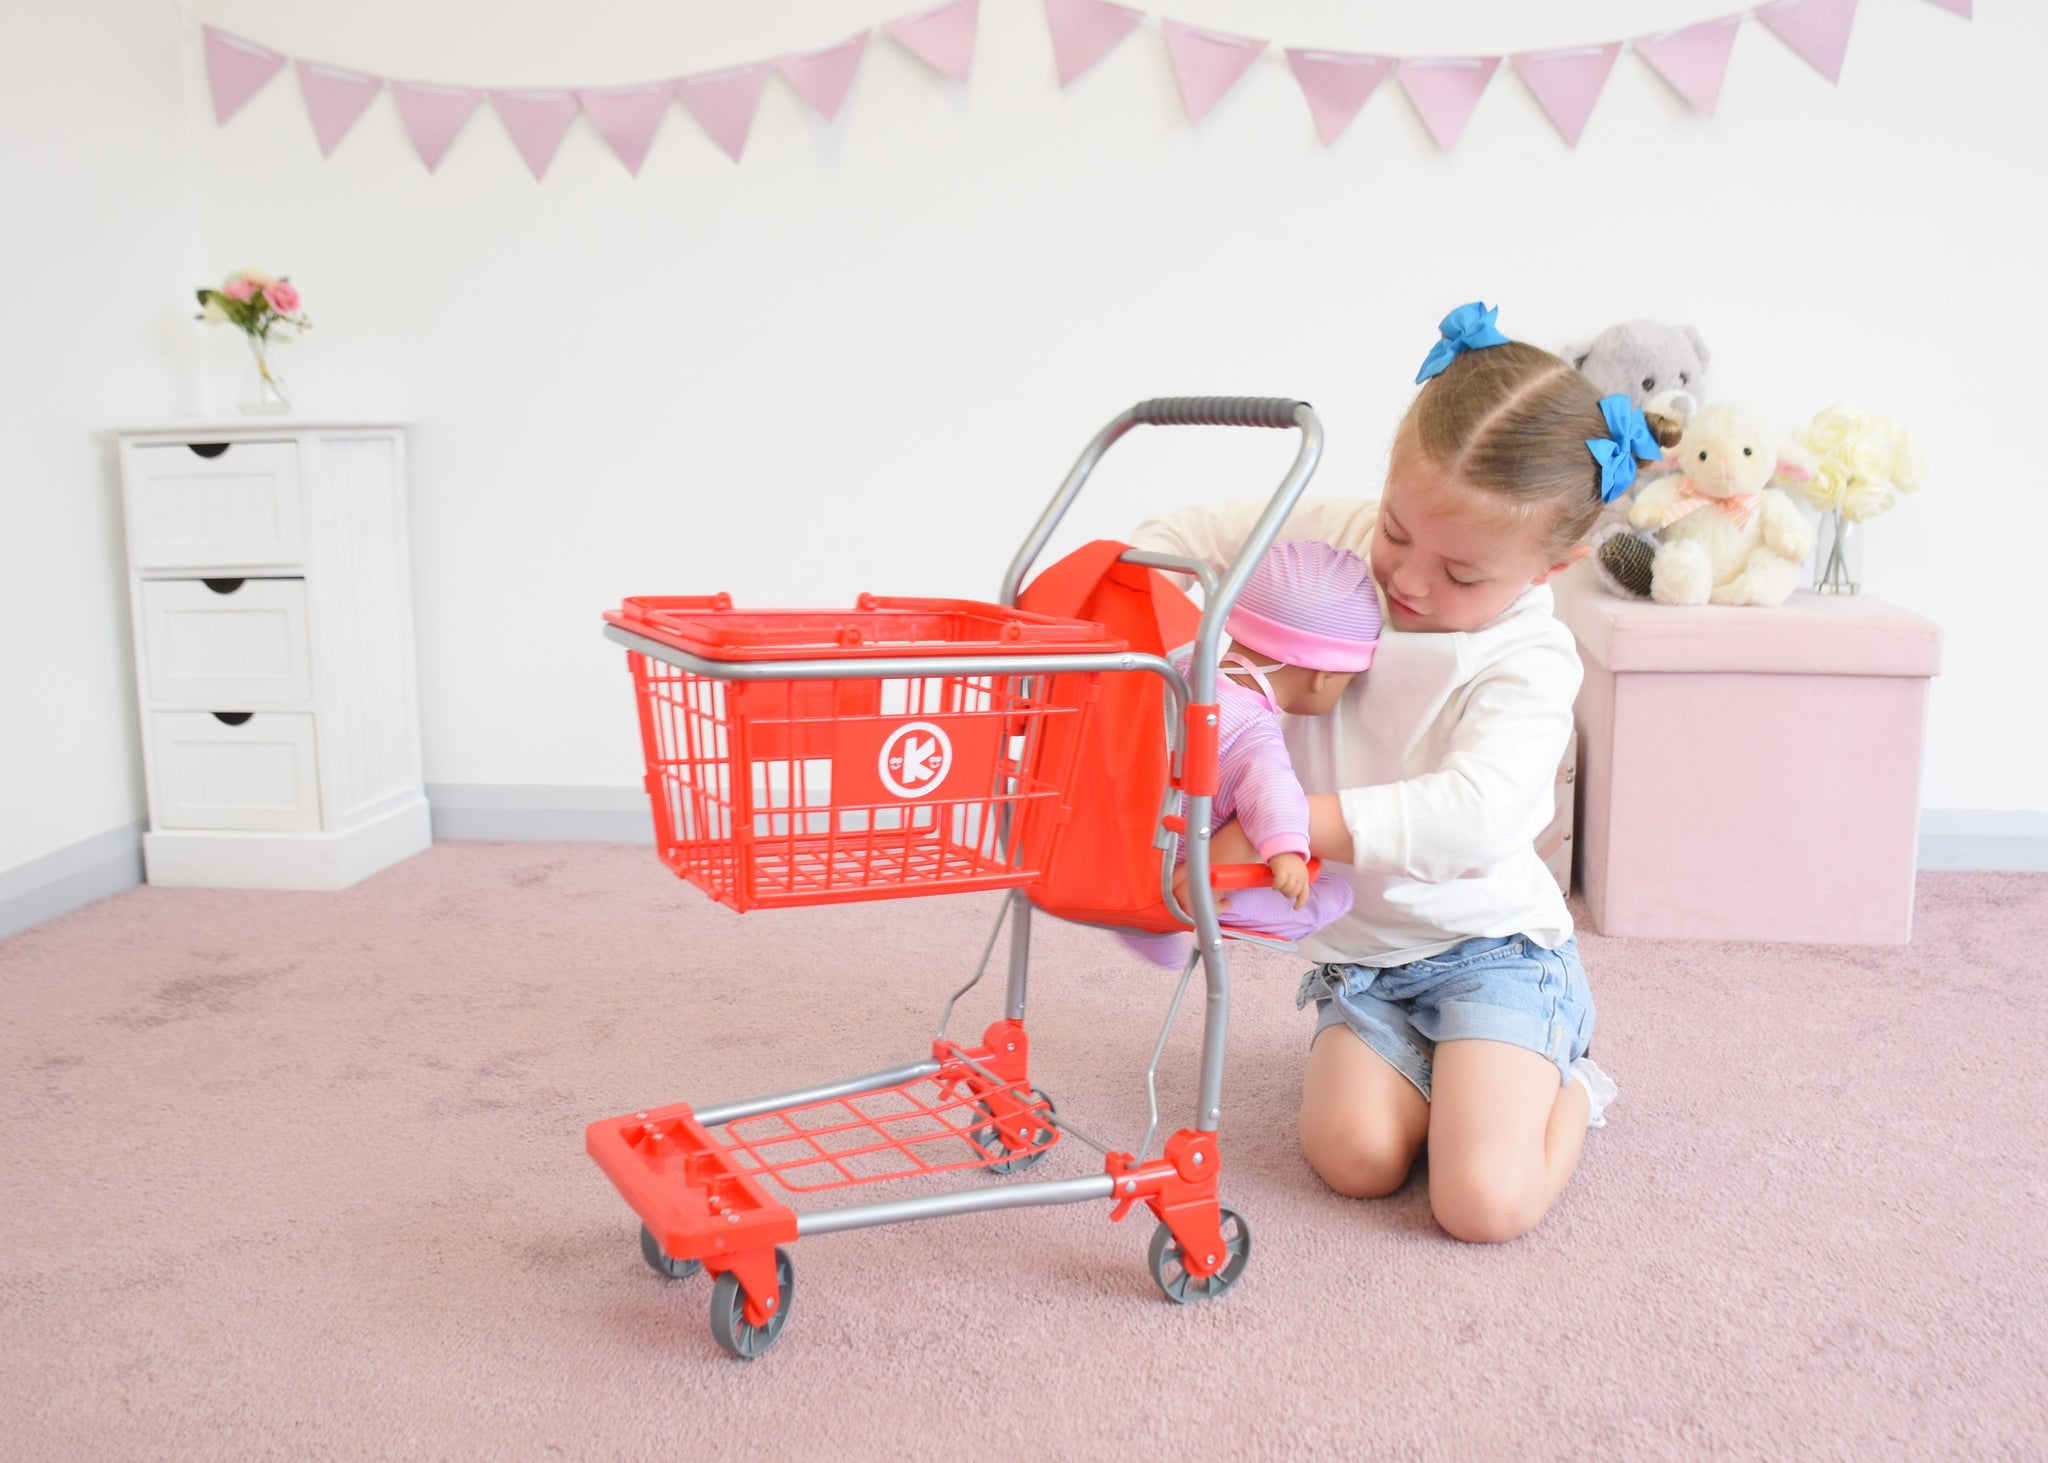 KOOKAMUNGA KIDS 2 in 1 Shopping Cart for Kids - Kids Shopping Cart - Toy Grocery Cart